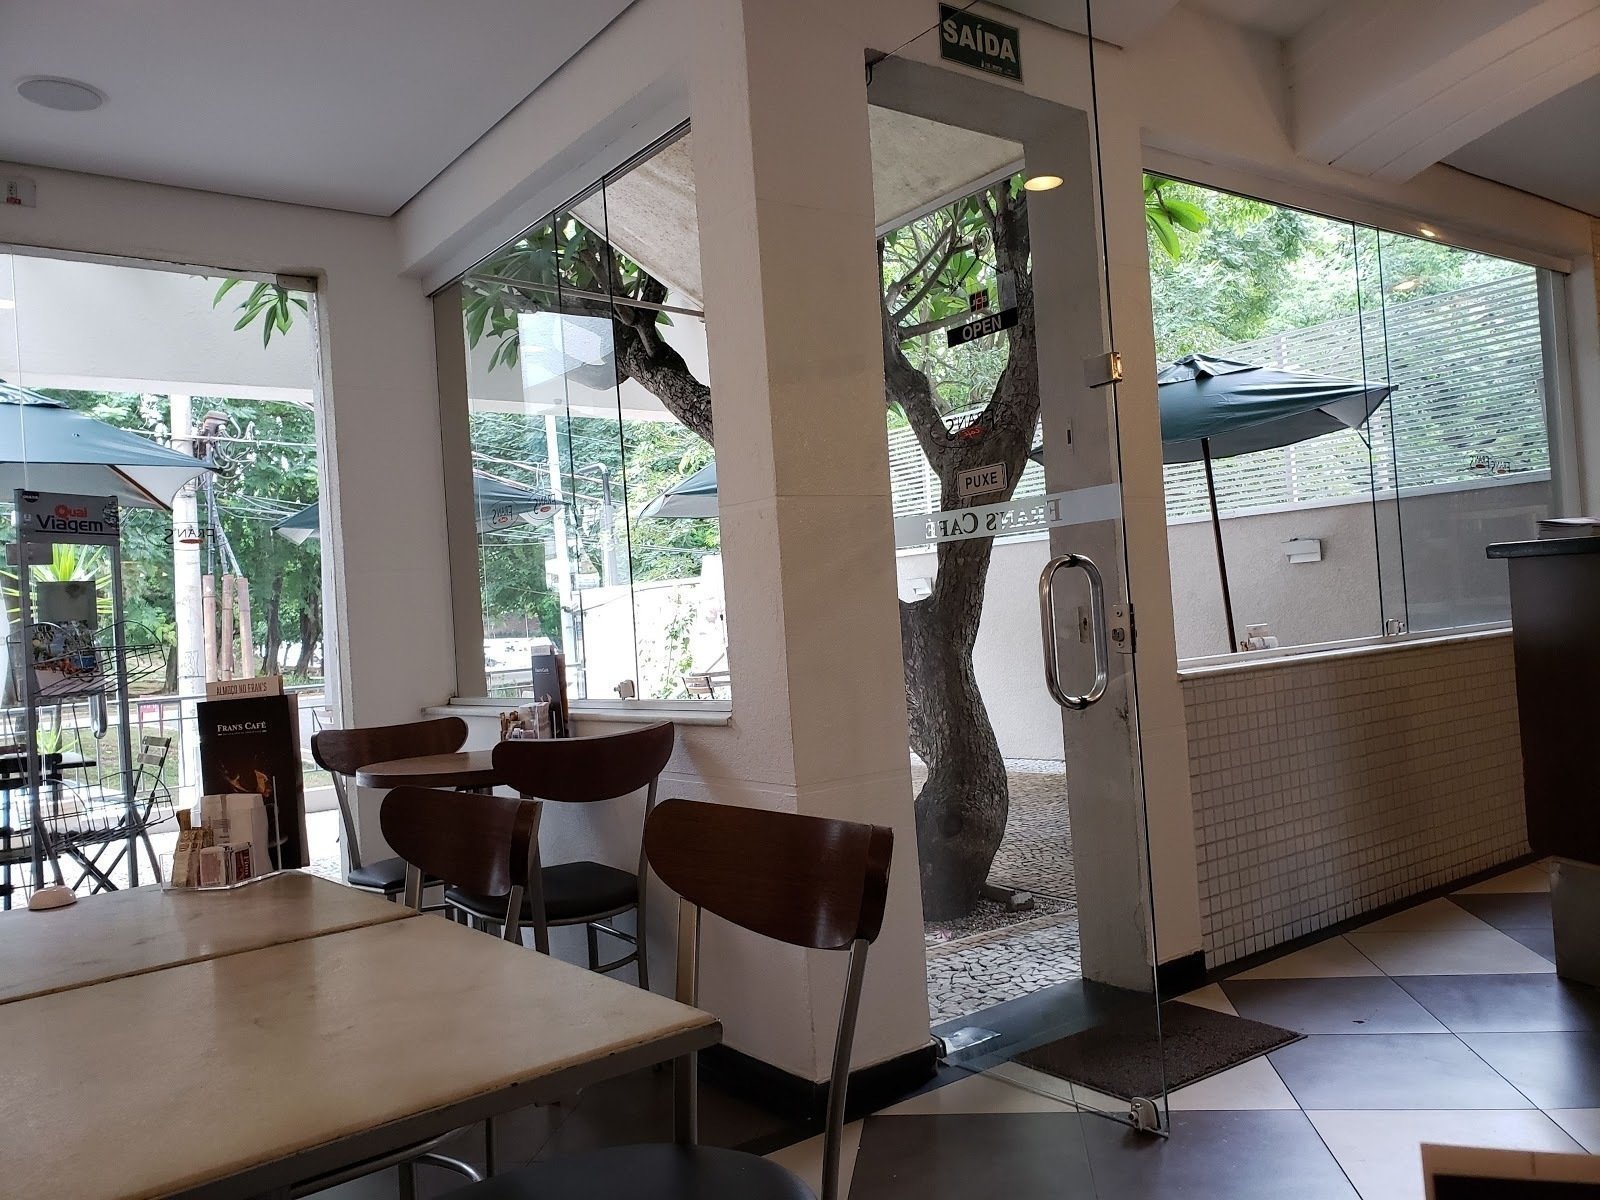 Fran's Café Tomás Carvalhal: A Work-Friendly Place in São Paulo